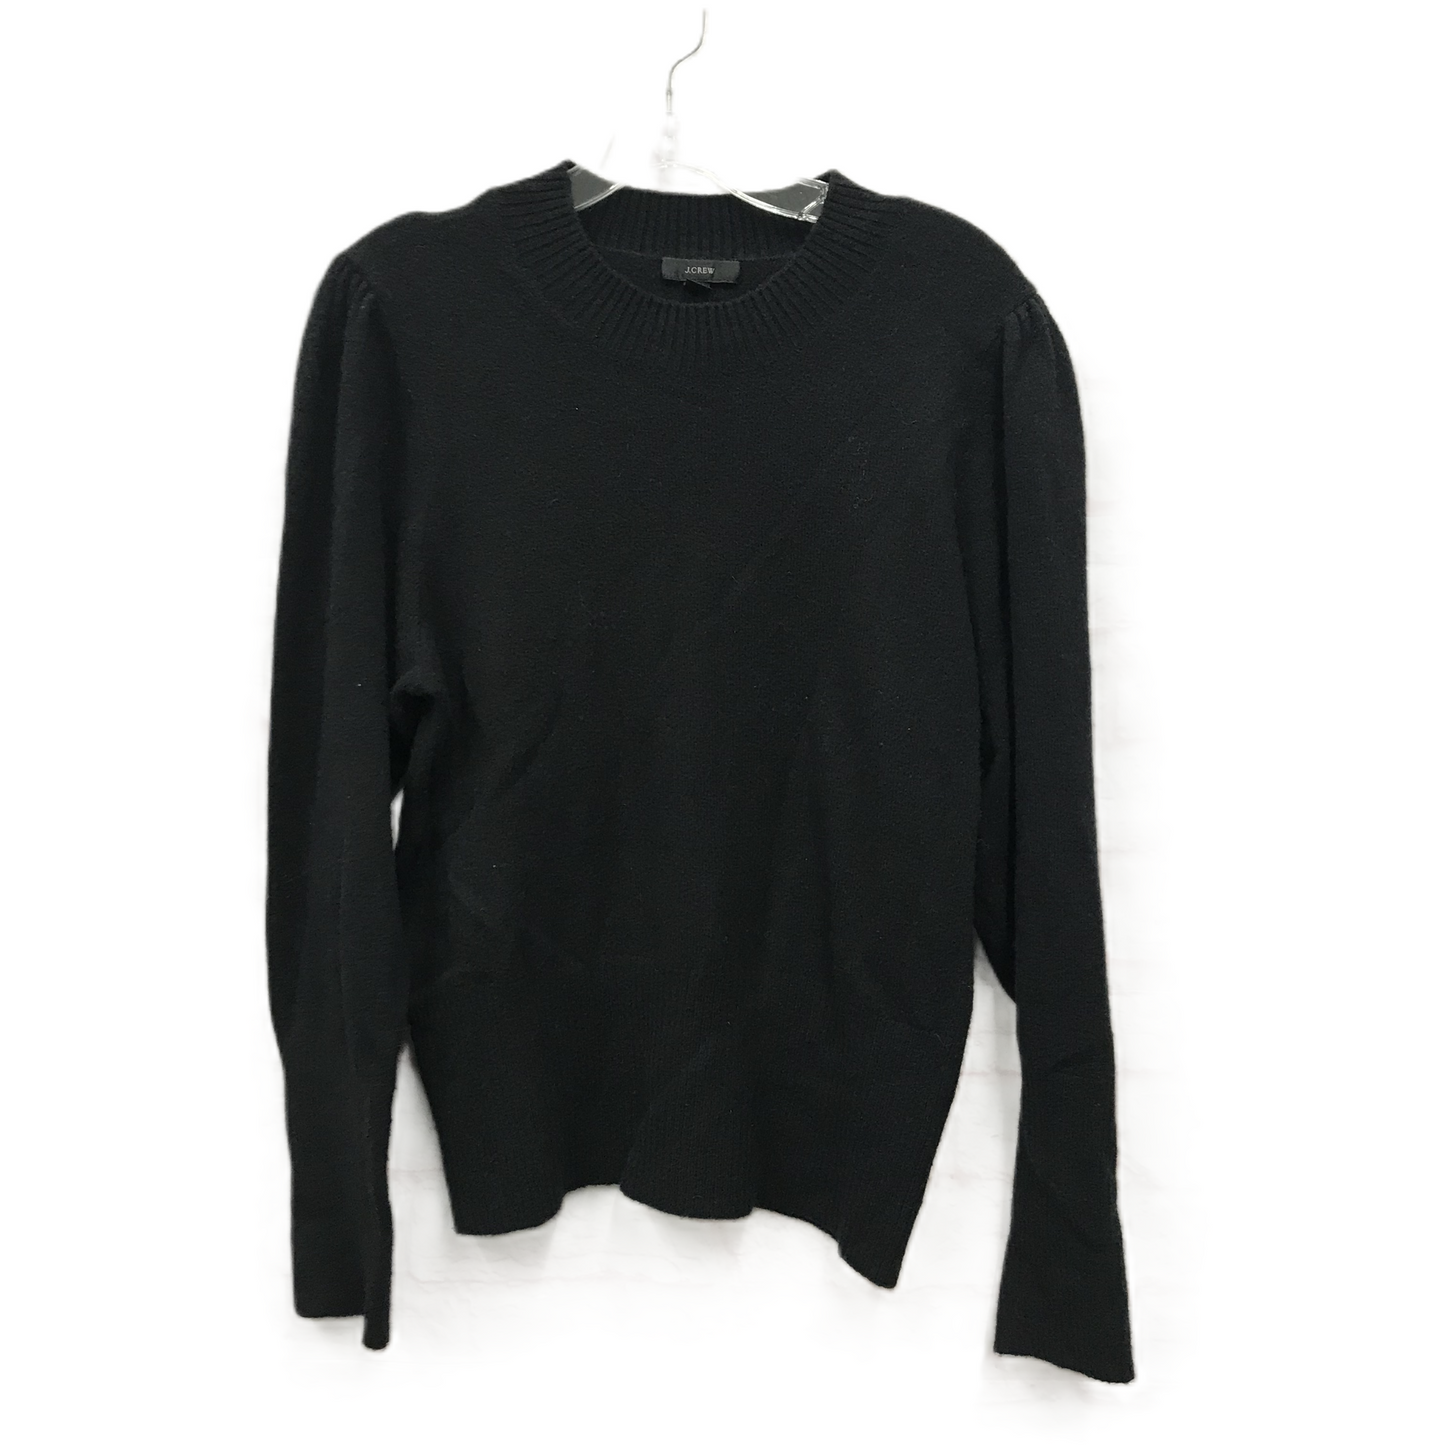 Black Sweater By J. Crew, Size: M